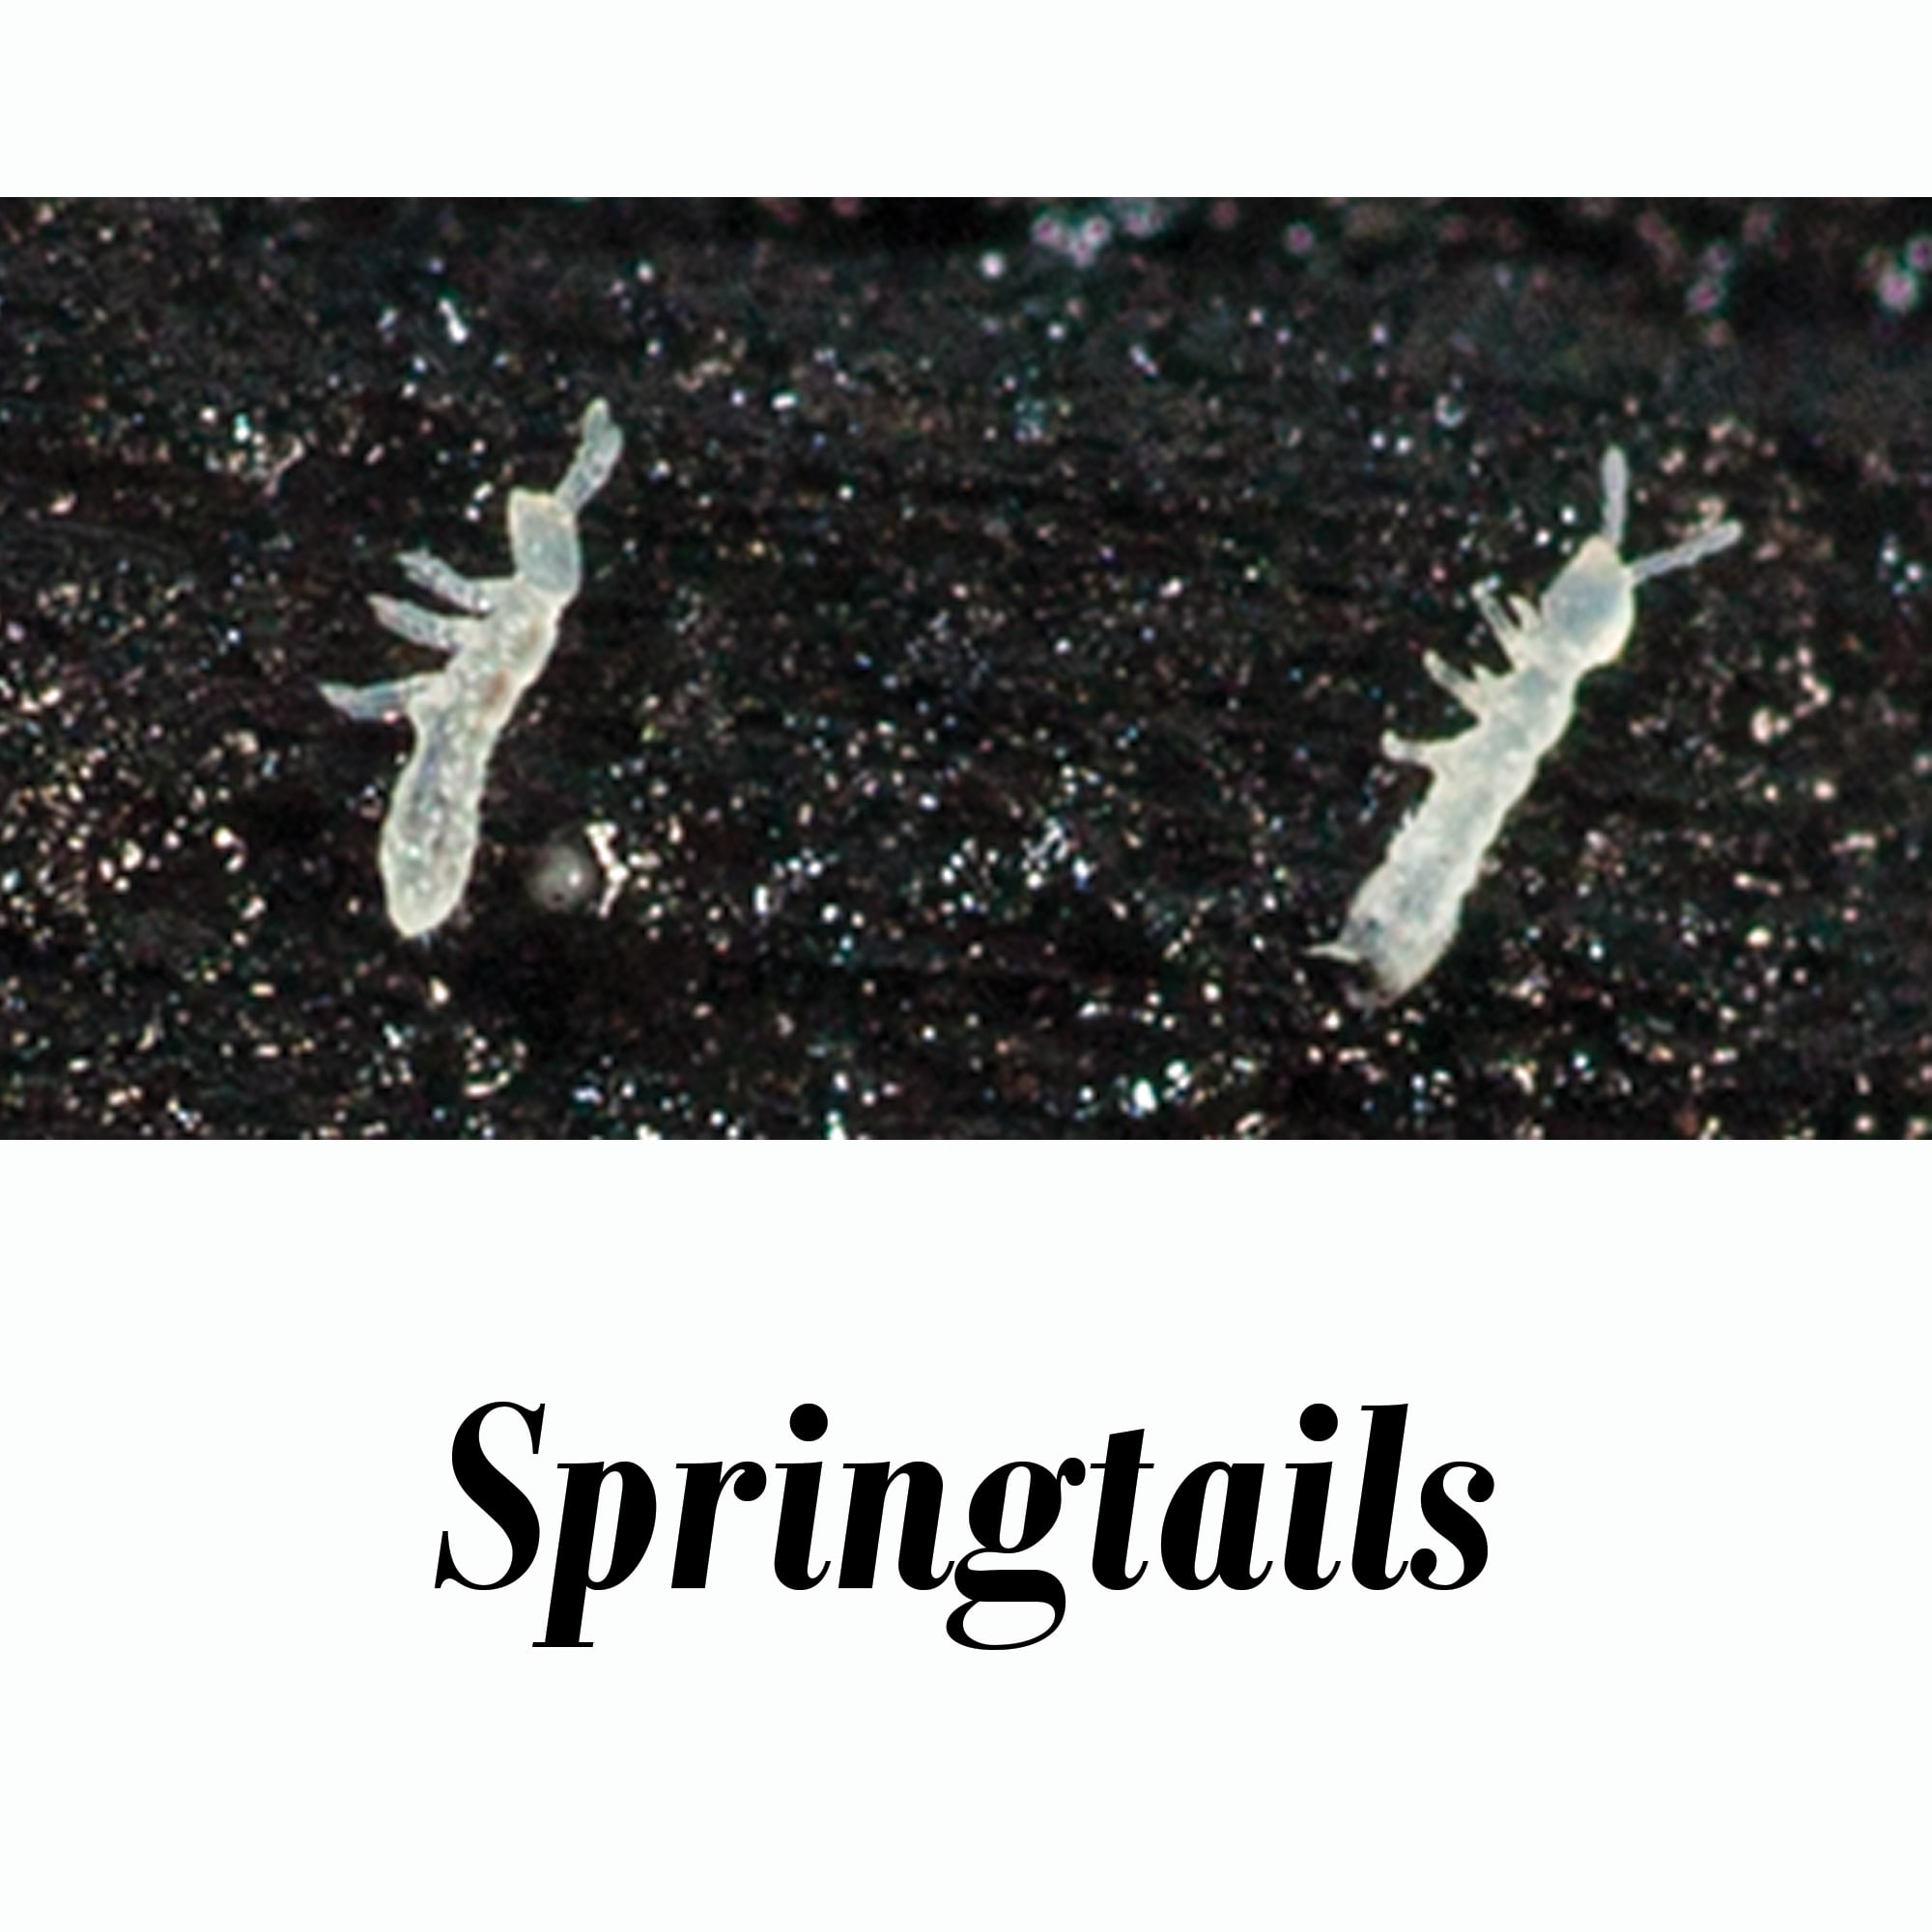 Springtail Cultures